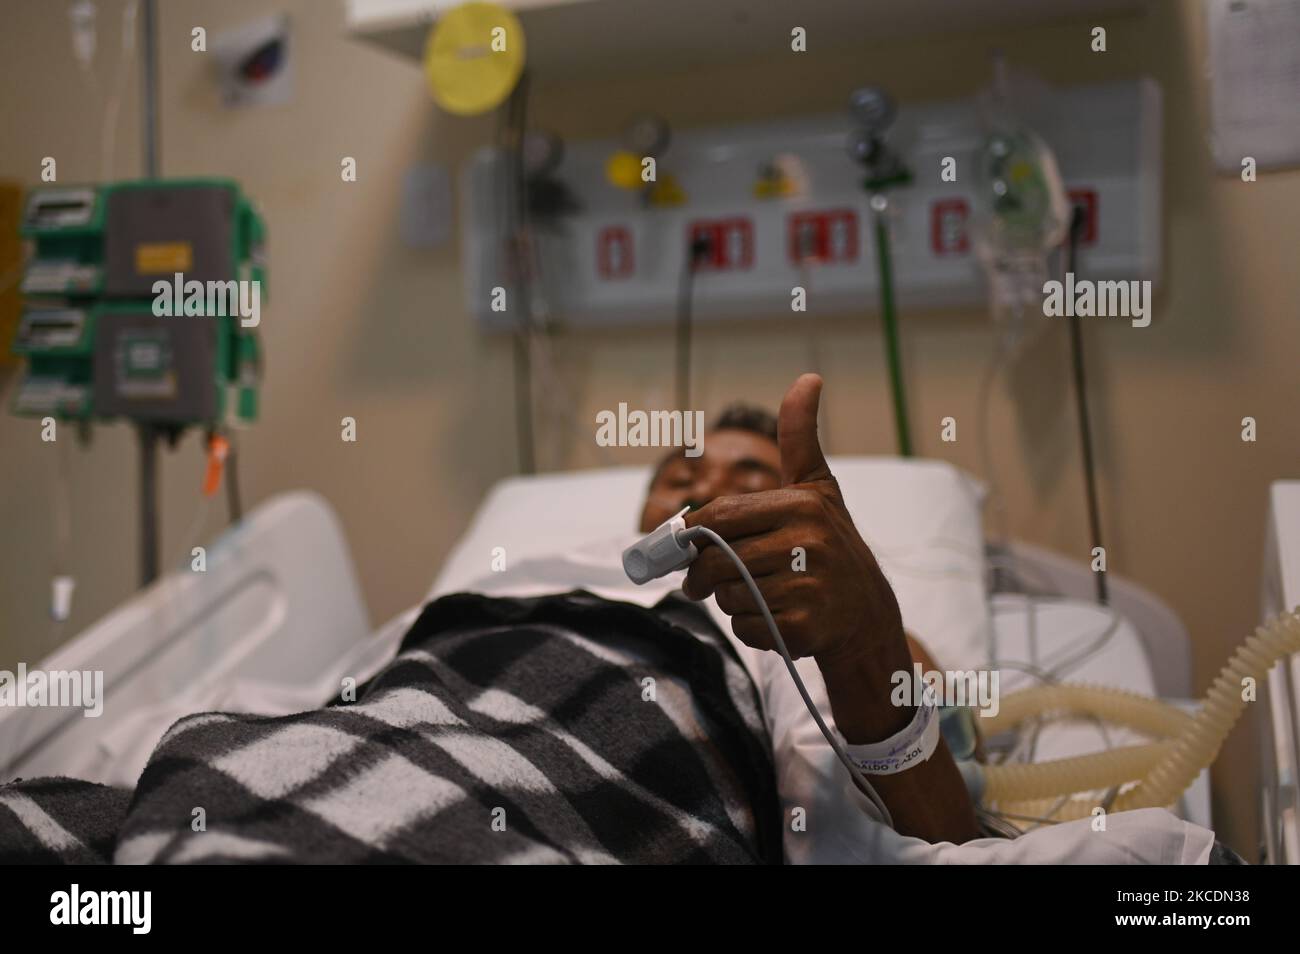 An intubated coronavirus disease (COVID-19) patient gestures a positive sign at Ronaldo Gazolla Hospital ICU in Acari, Rio de Janeiro, Brazil, on April 30, 2020. (Photo by Andre Borges/NurPhoto) Stock Photo